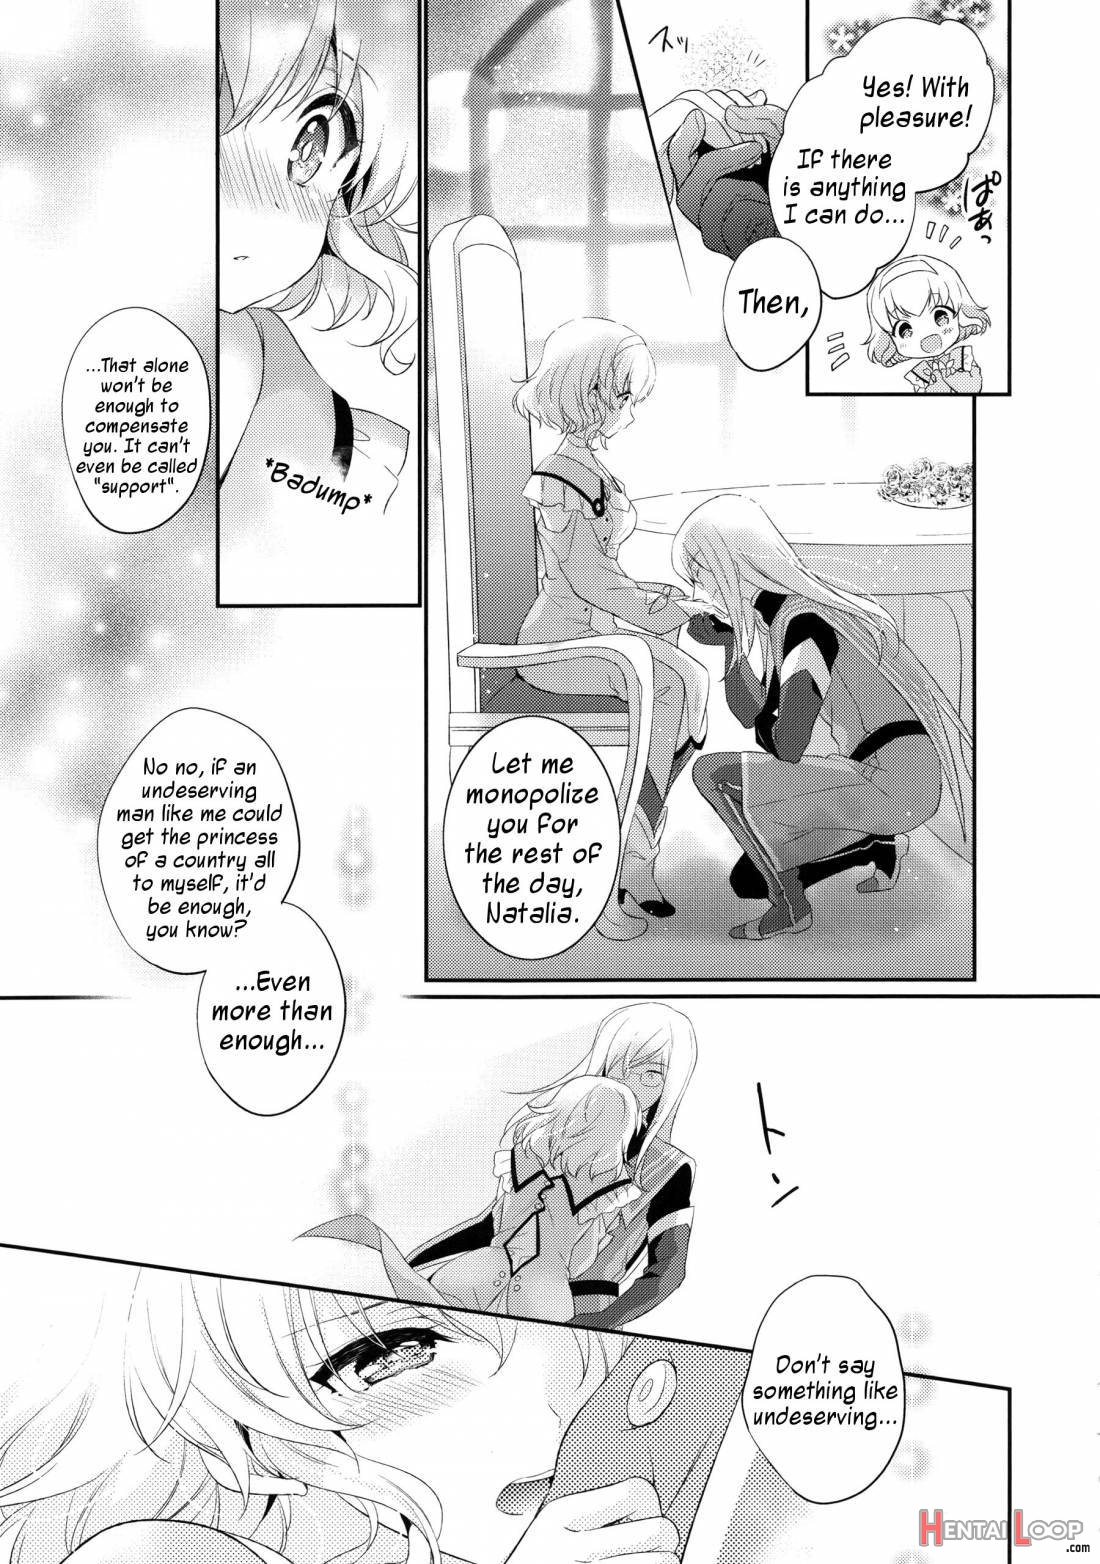 Special Secret Lady page 5